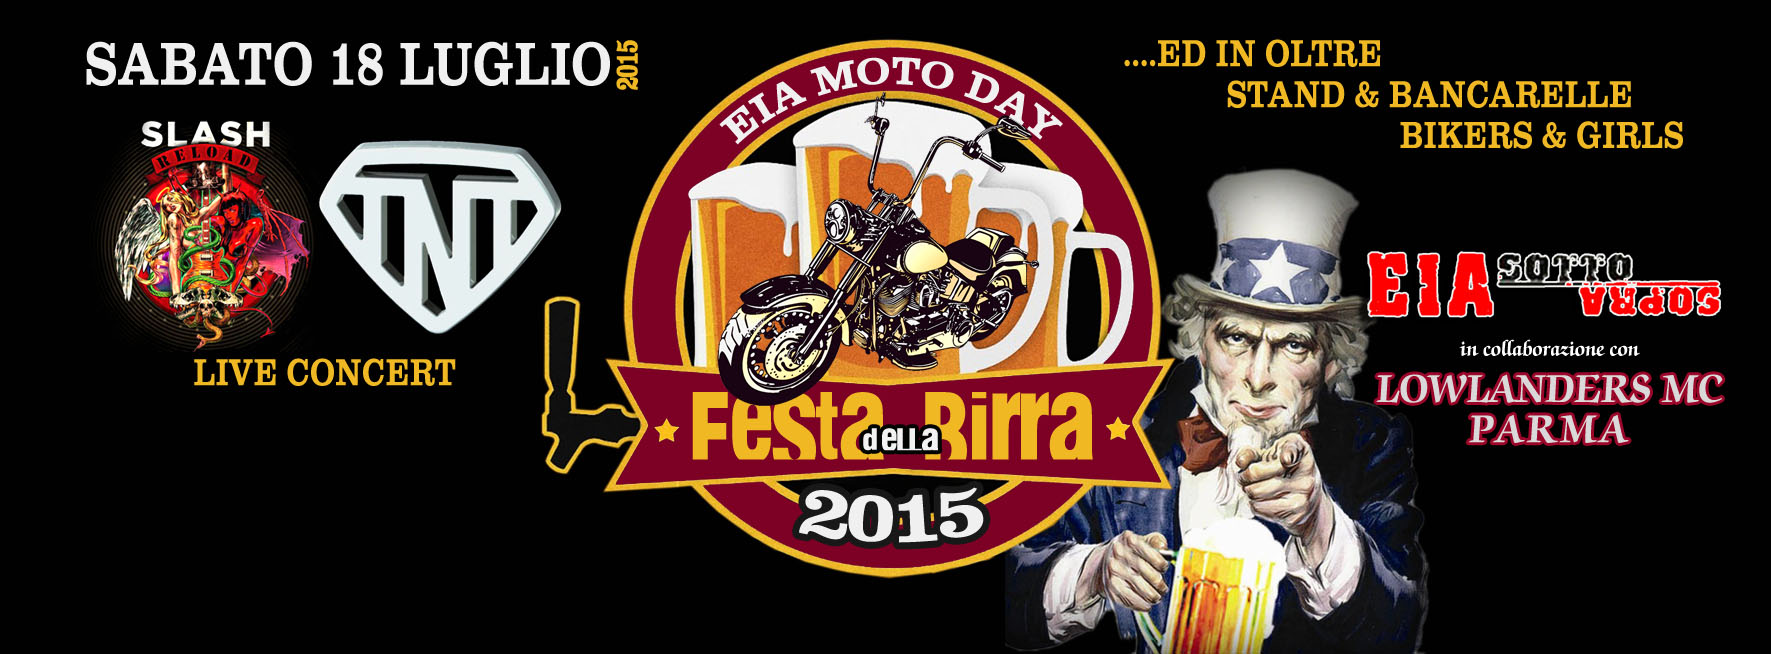 Eia motor day 2015